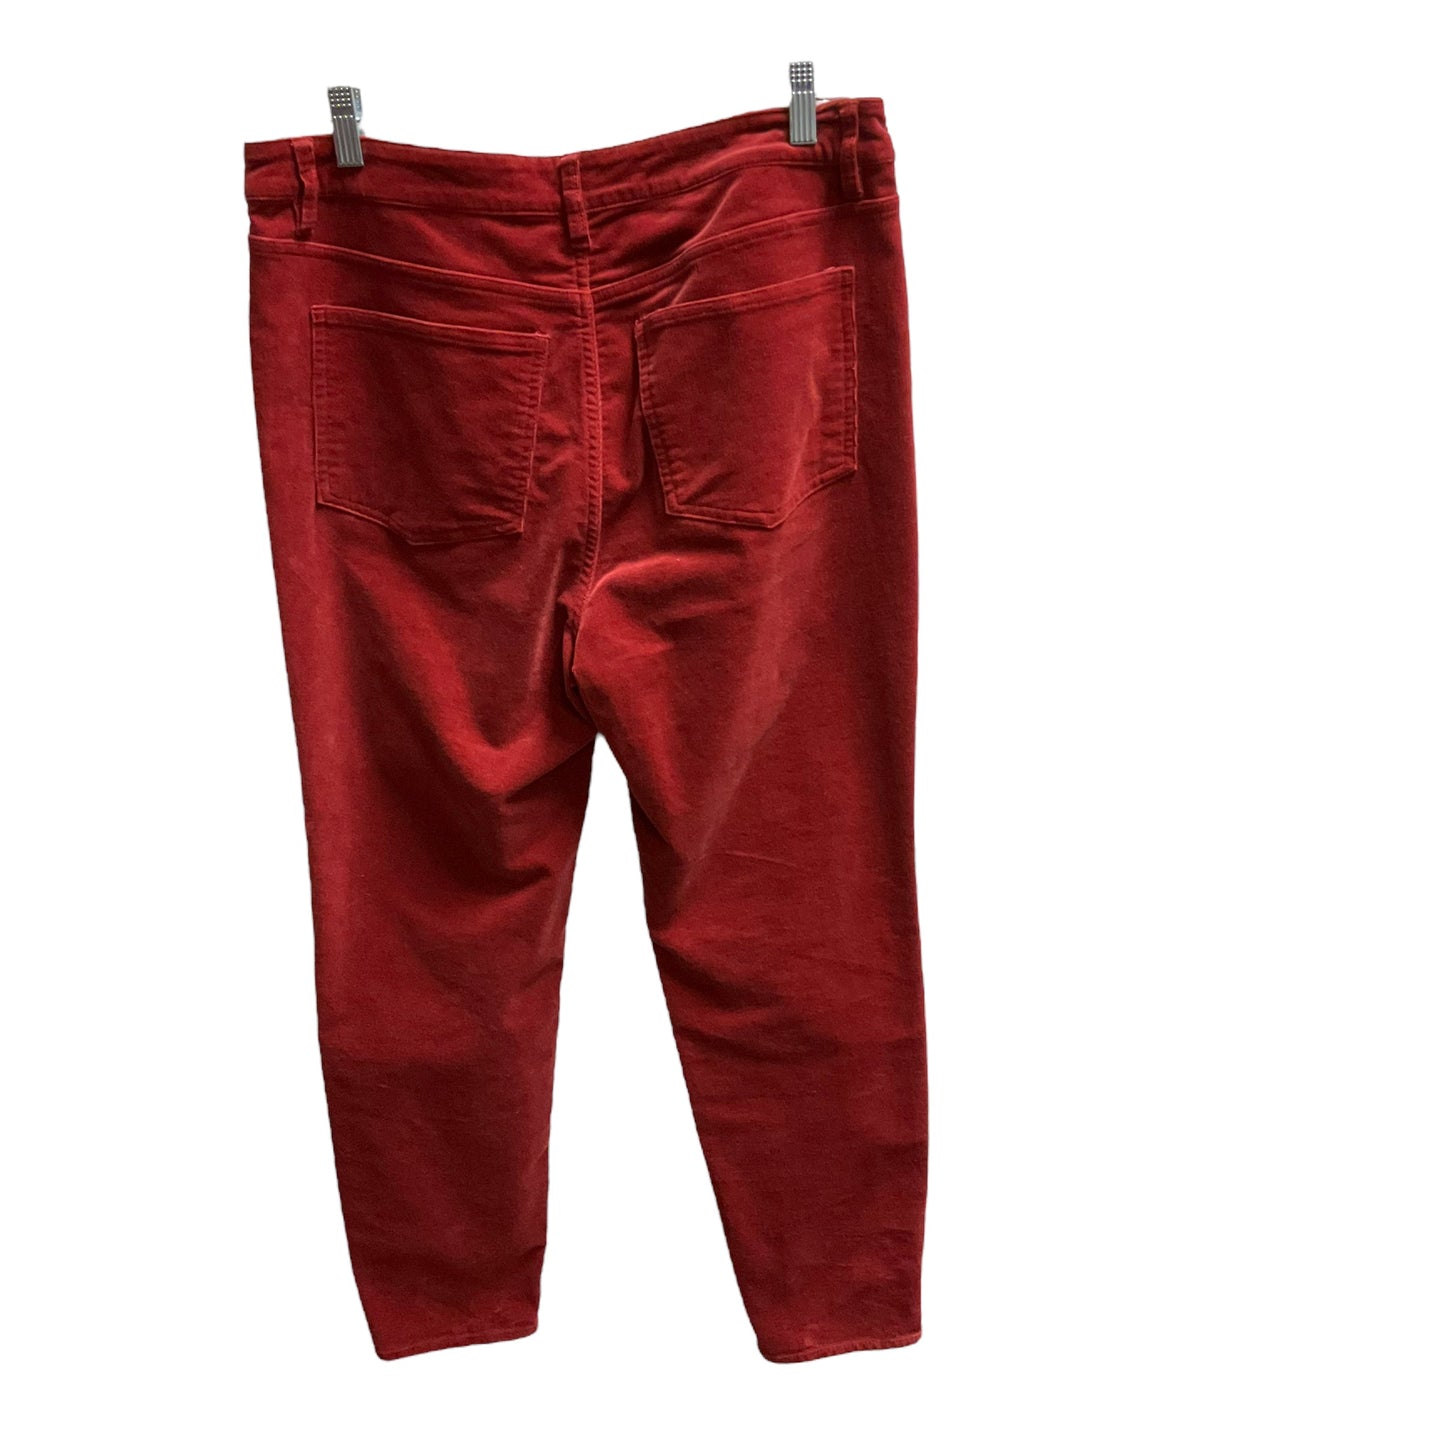 Pants Corduroy By Soft Surroundings  Size: 12petite